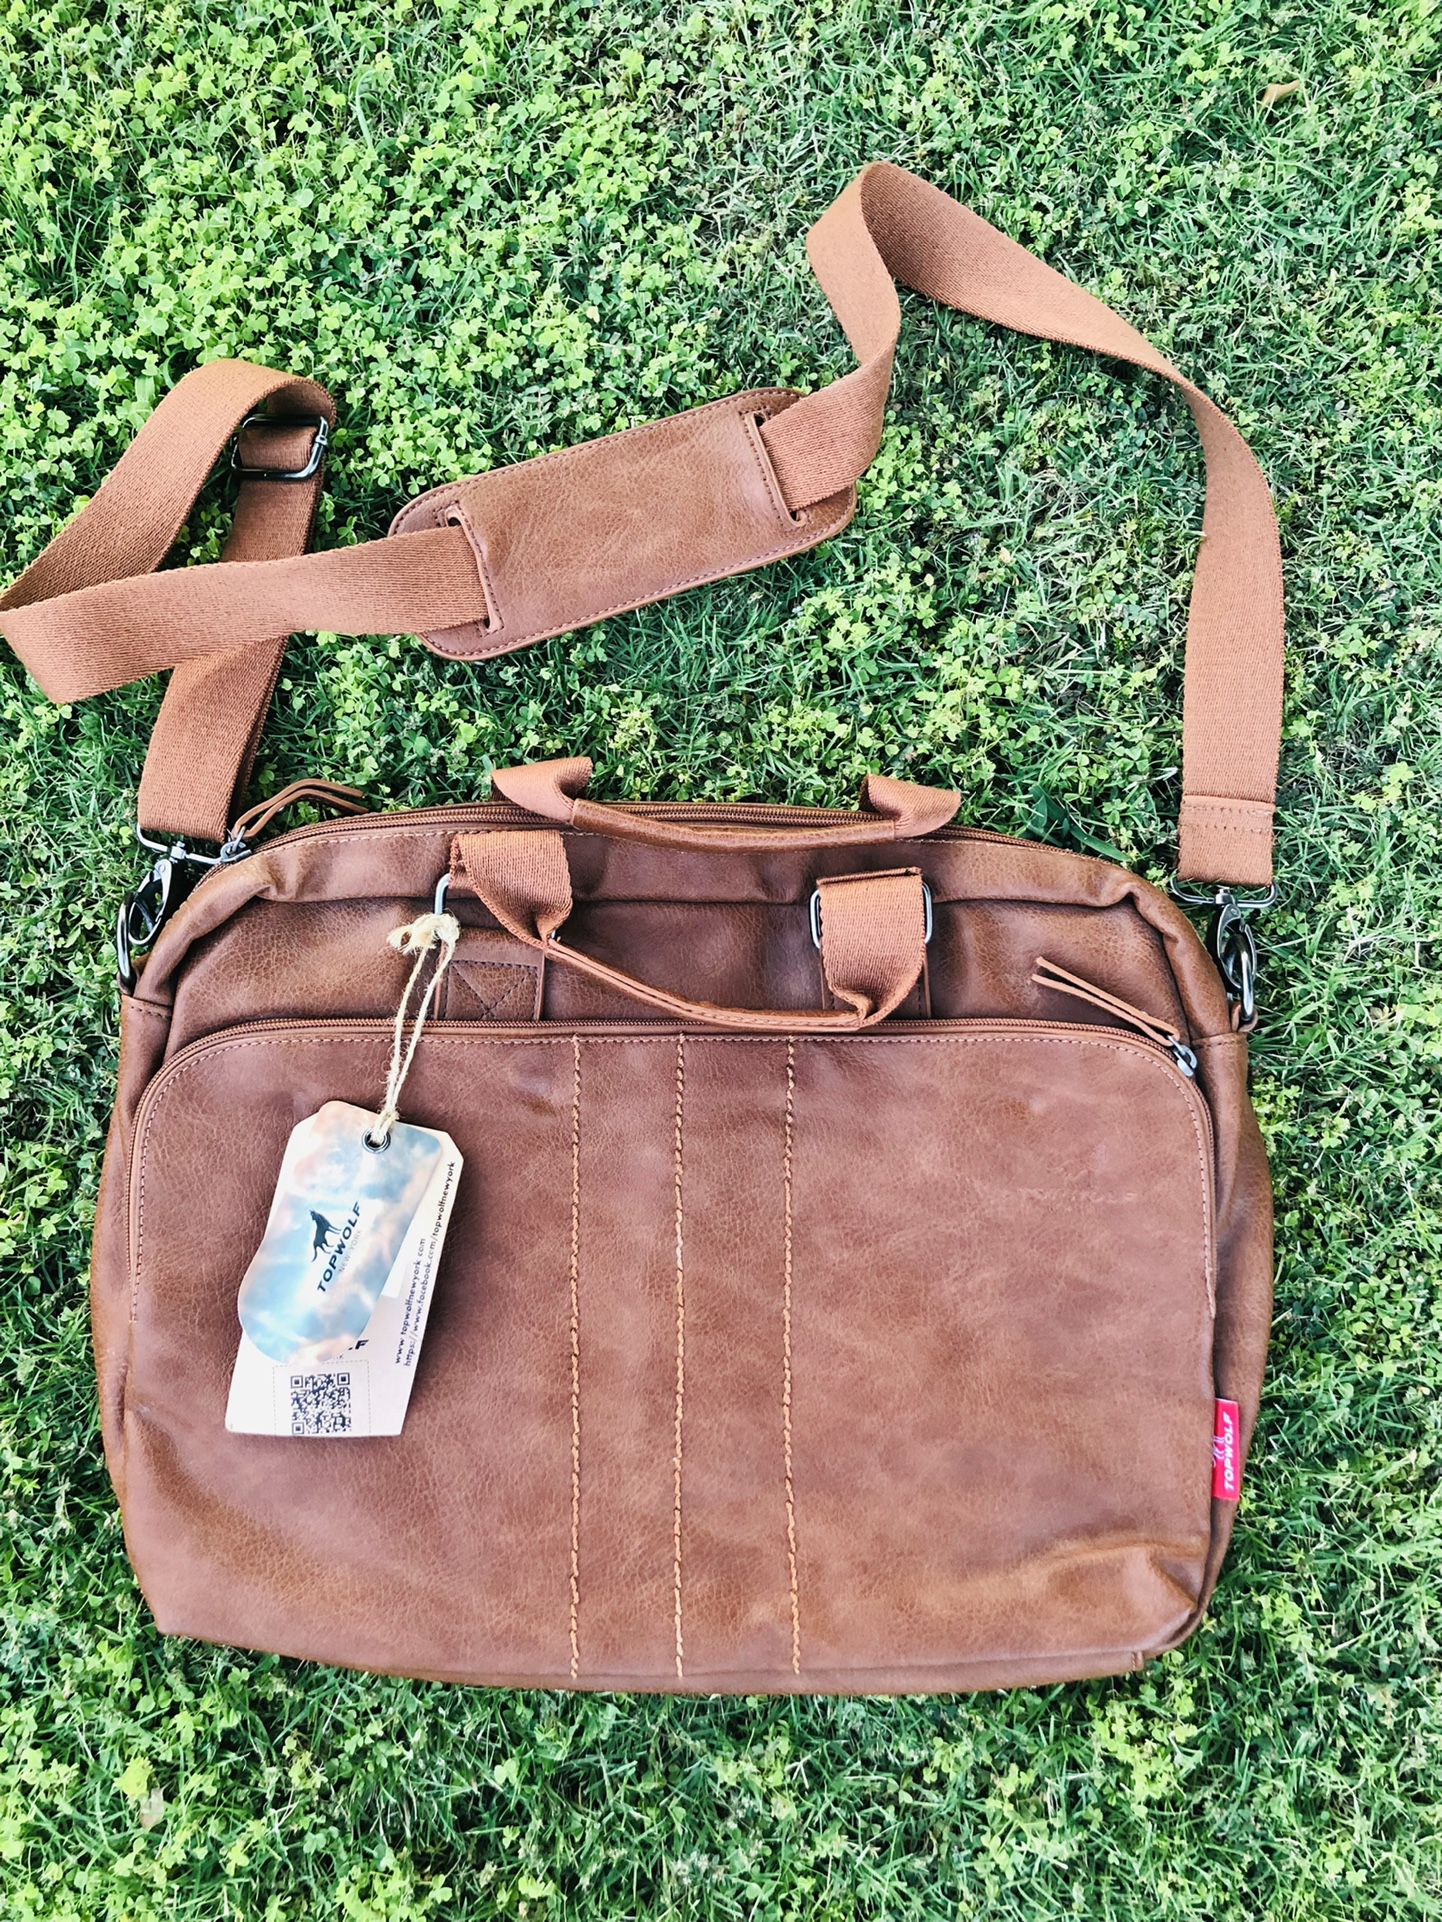 New  Topwolf New York Laptop Travel Shoulder Messenger Bag Handbag ⭐️ $40